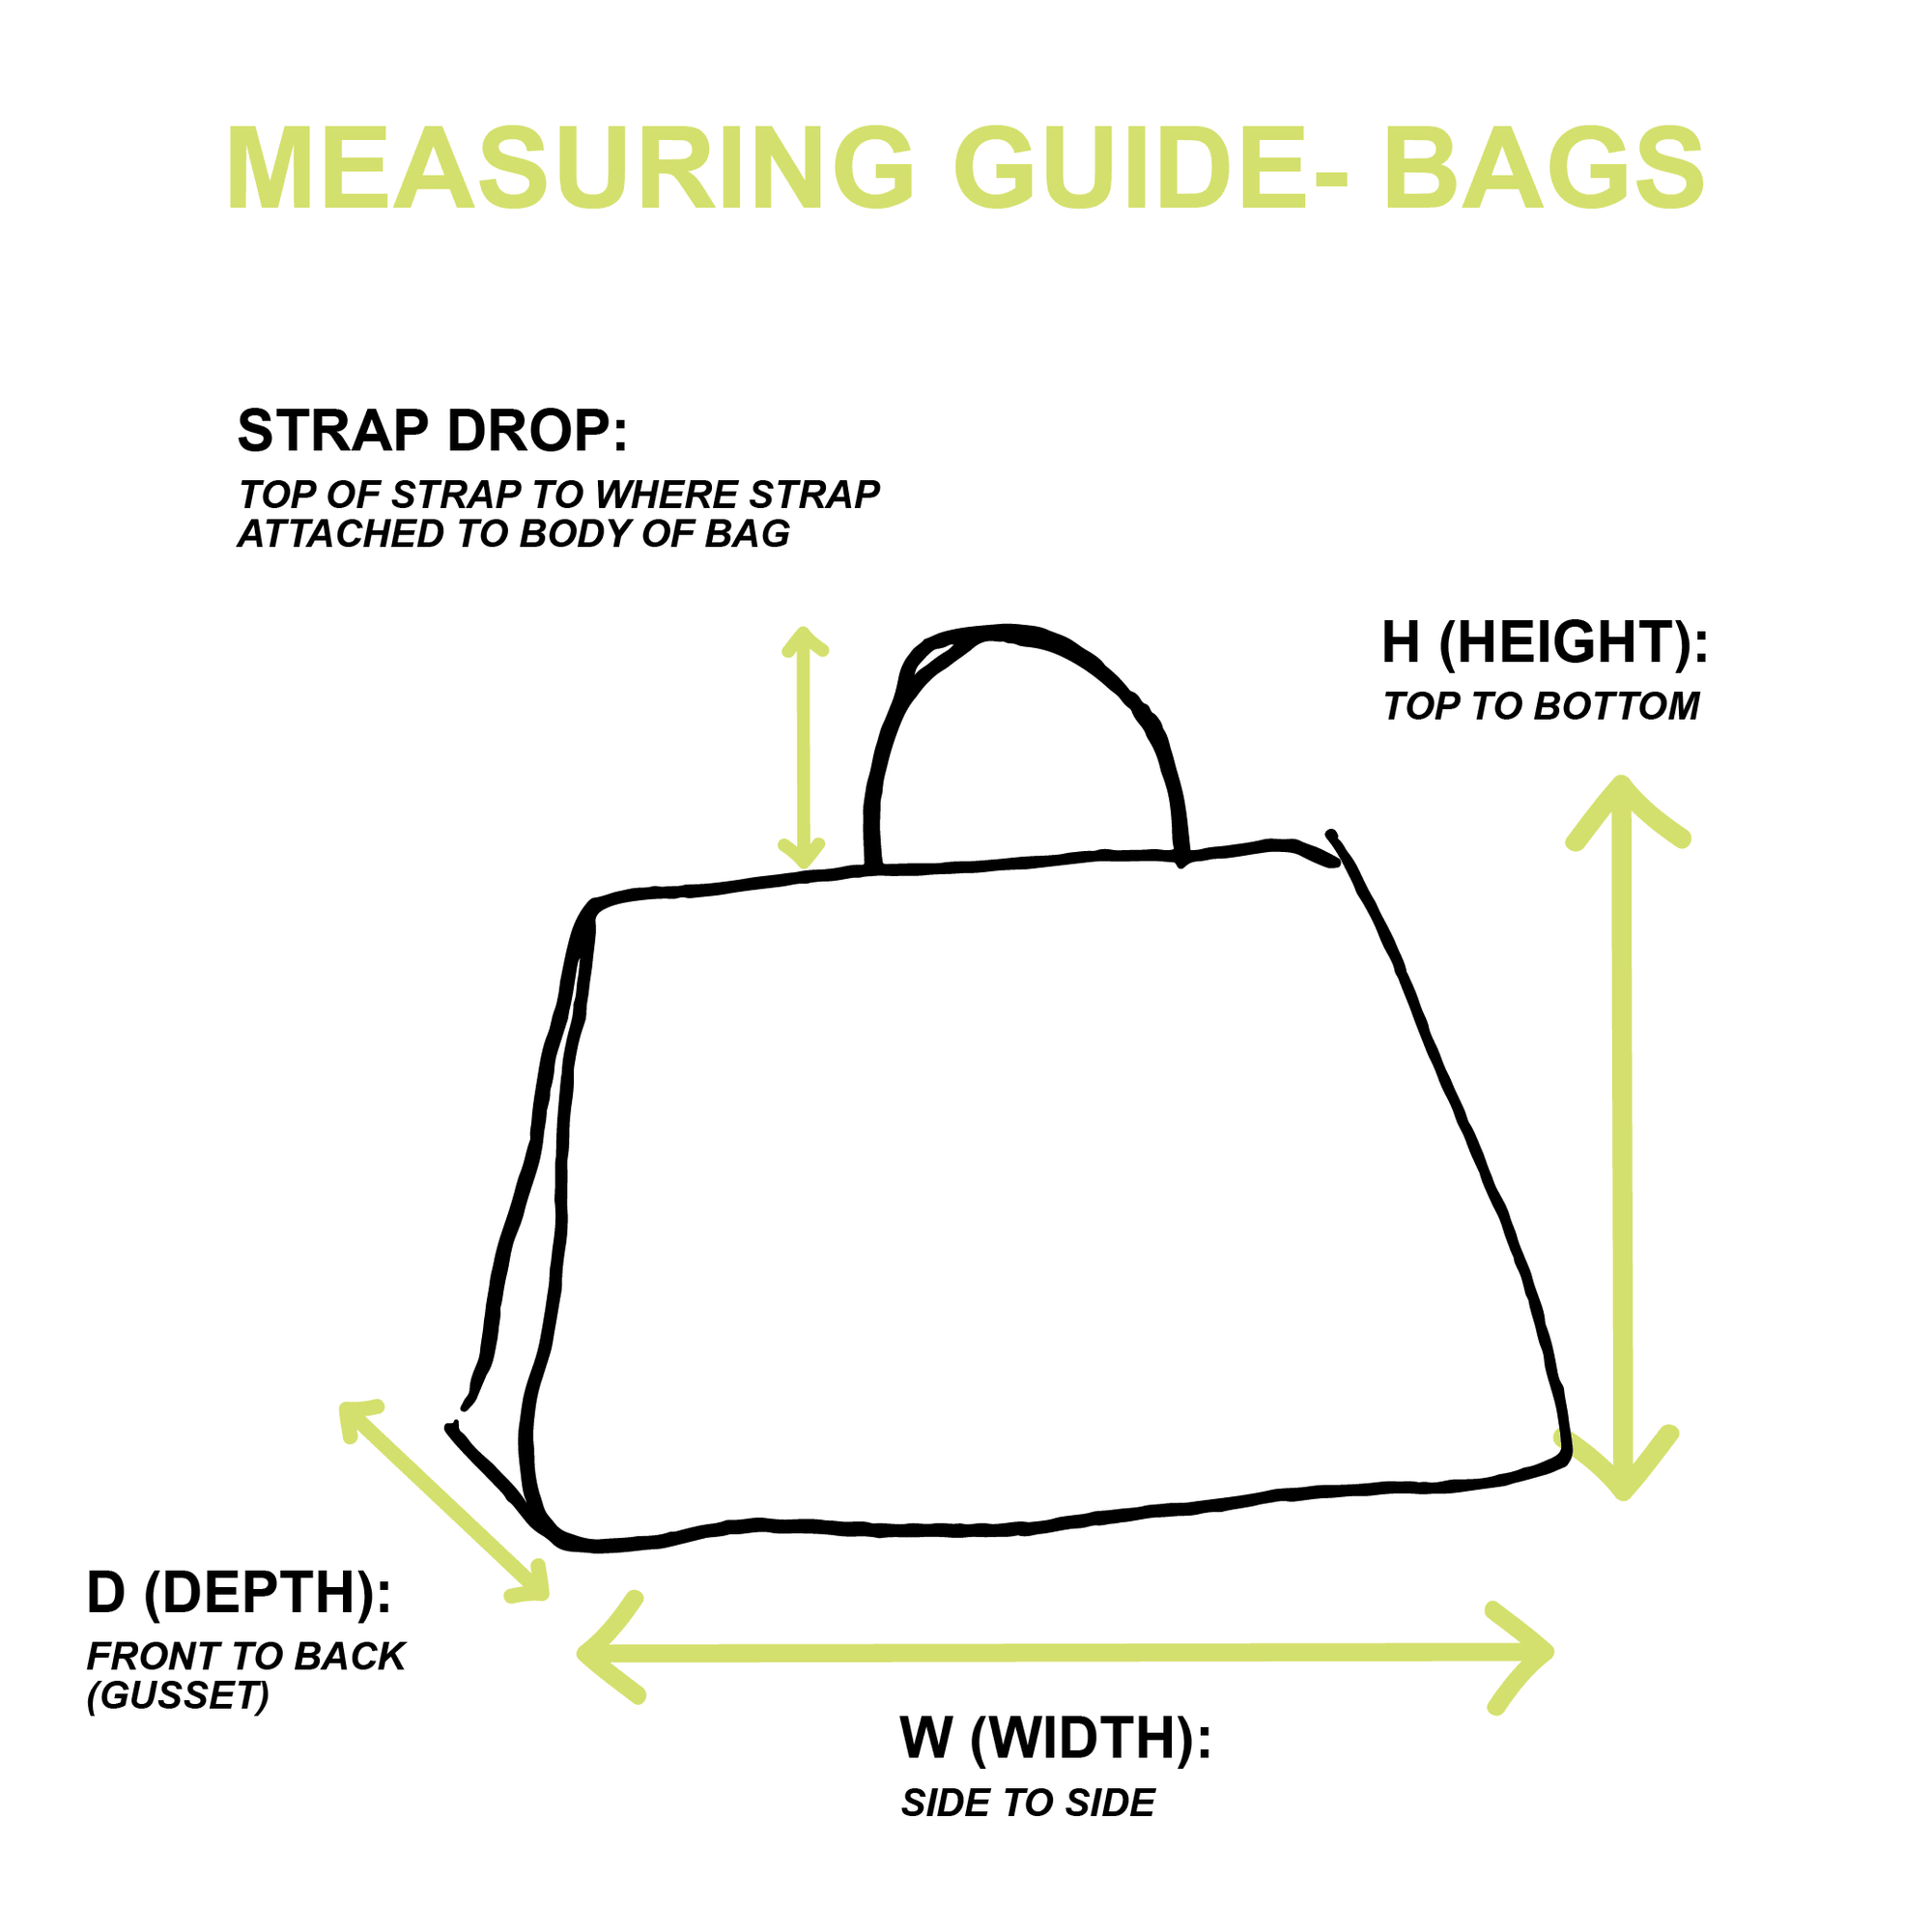 Pucci Pink Print Clasp Bag - Handbags